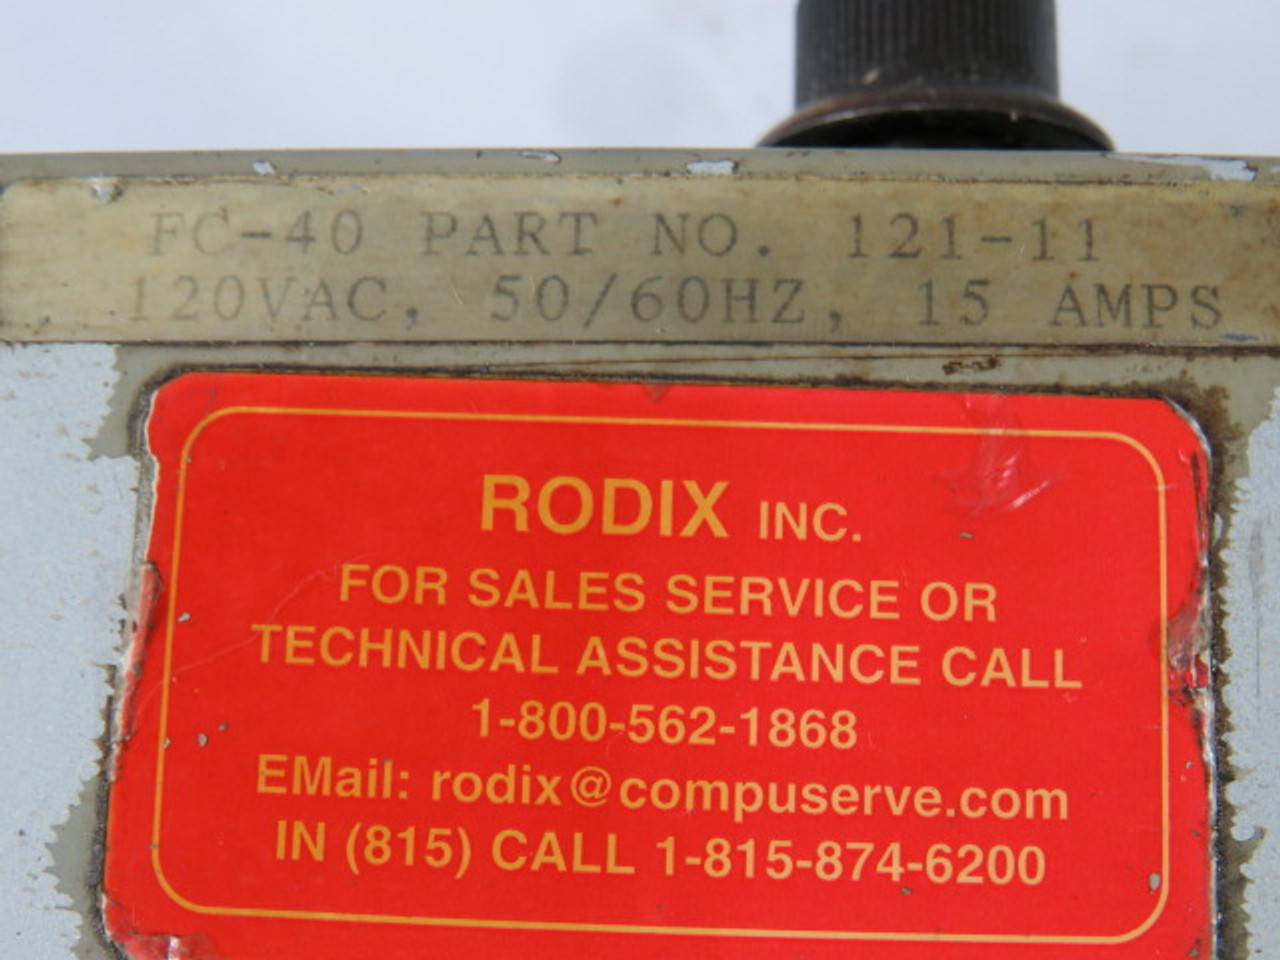 Rodix 121-11 Feeder Cube Controller FC-40 Plus 120VAC 50/60Hz 15A USED